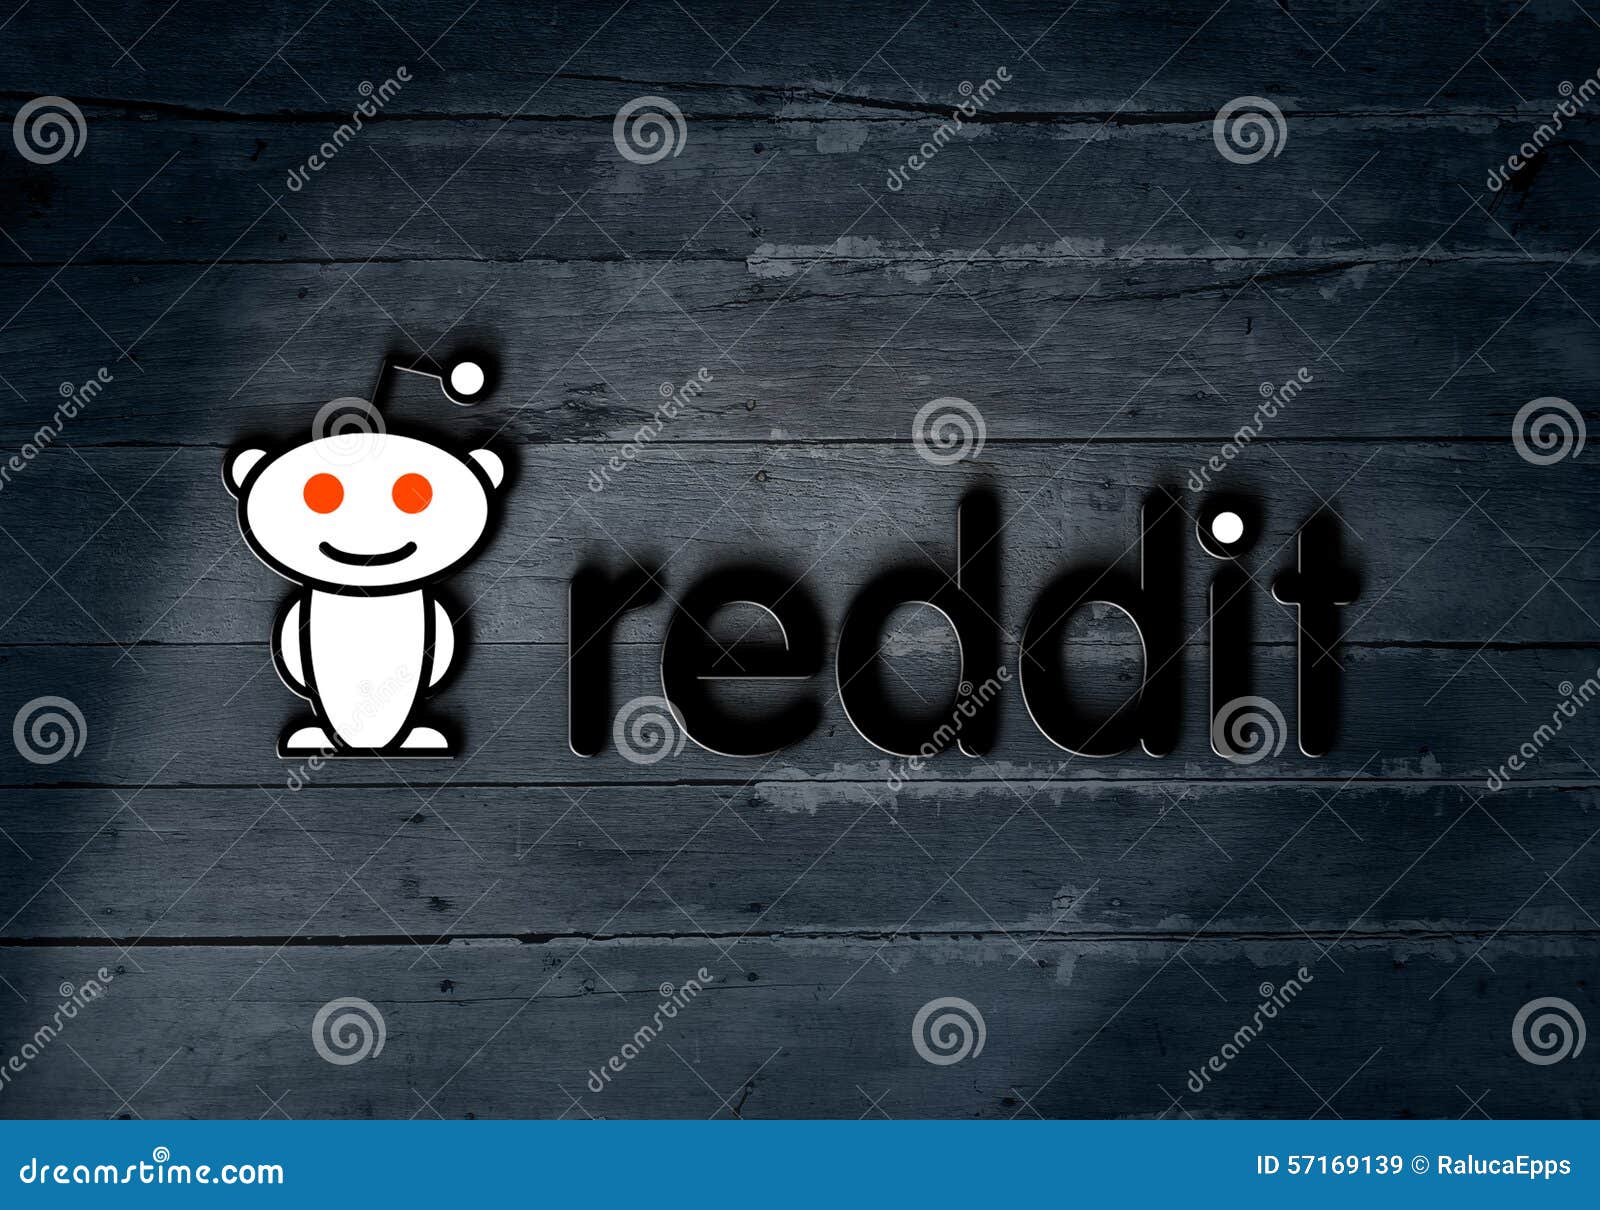 How To Dark Web Reddit